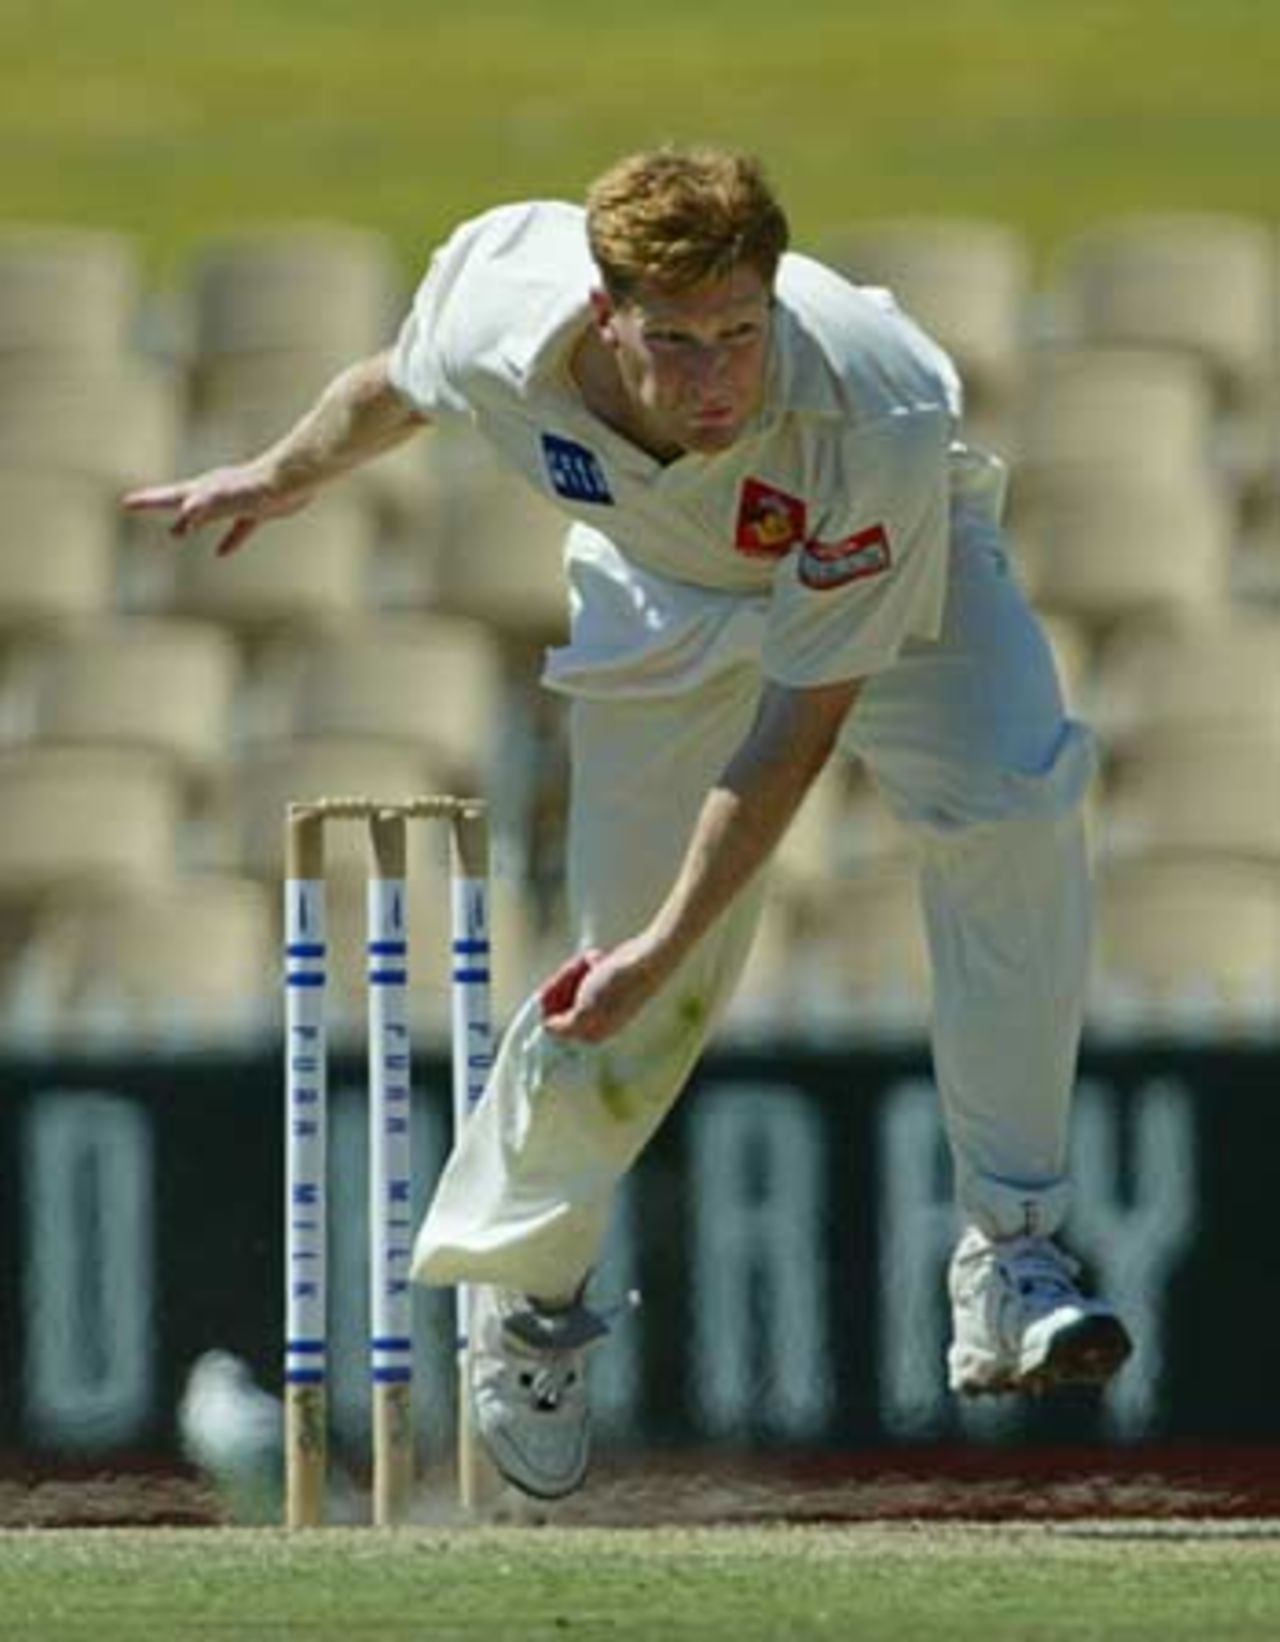 Matthew Inness bowling for Victoria, South Australia v Victoria, Adelaide, February 2, 2004